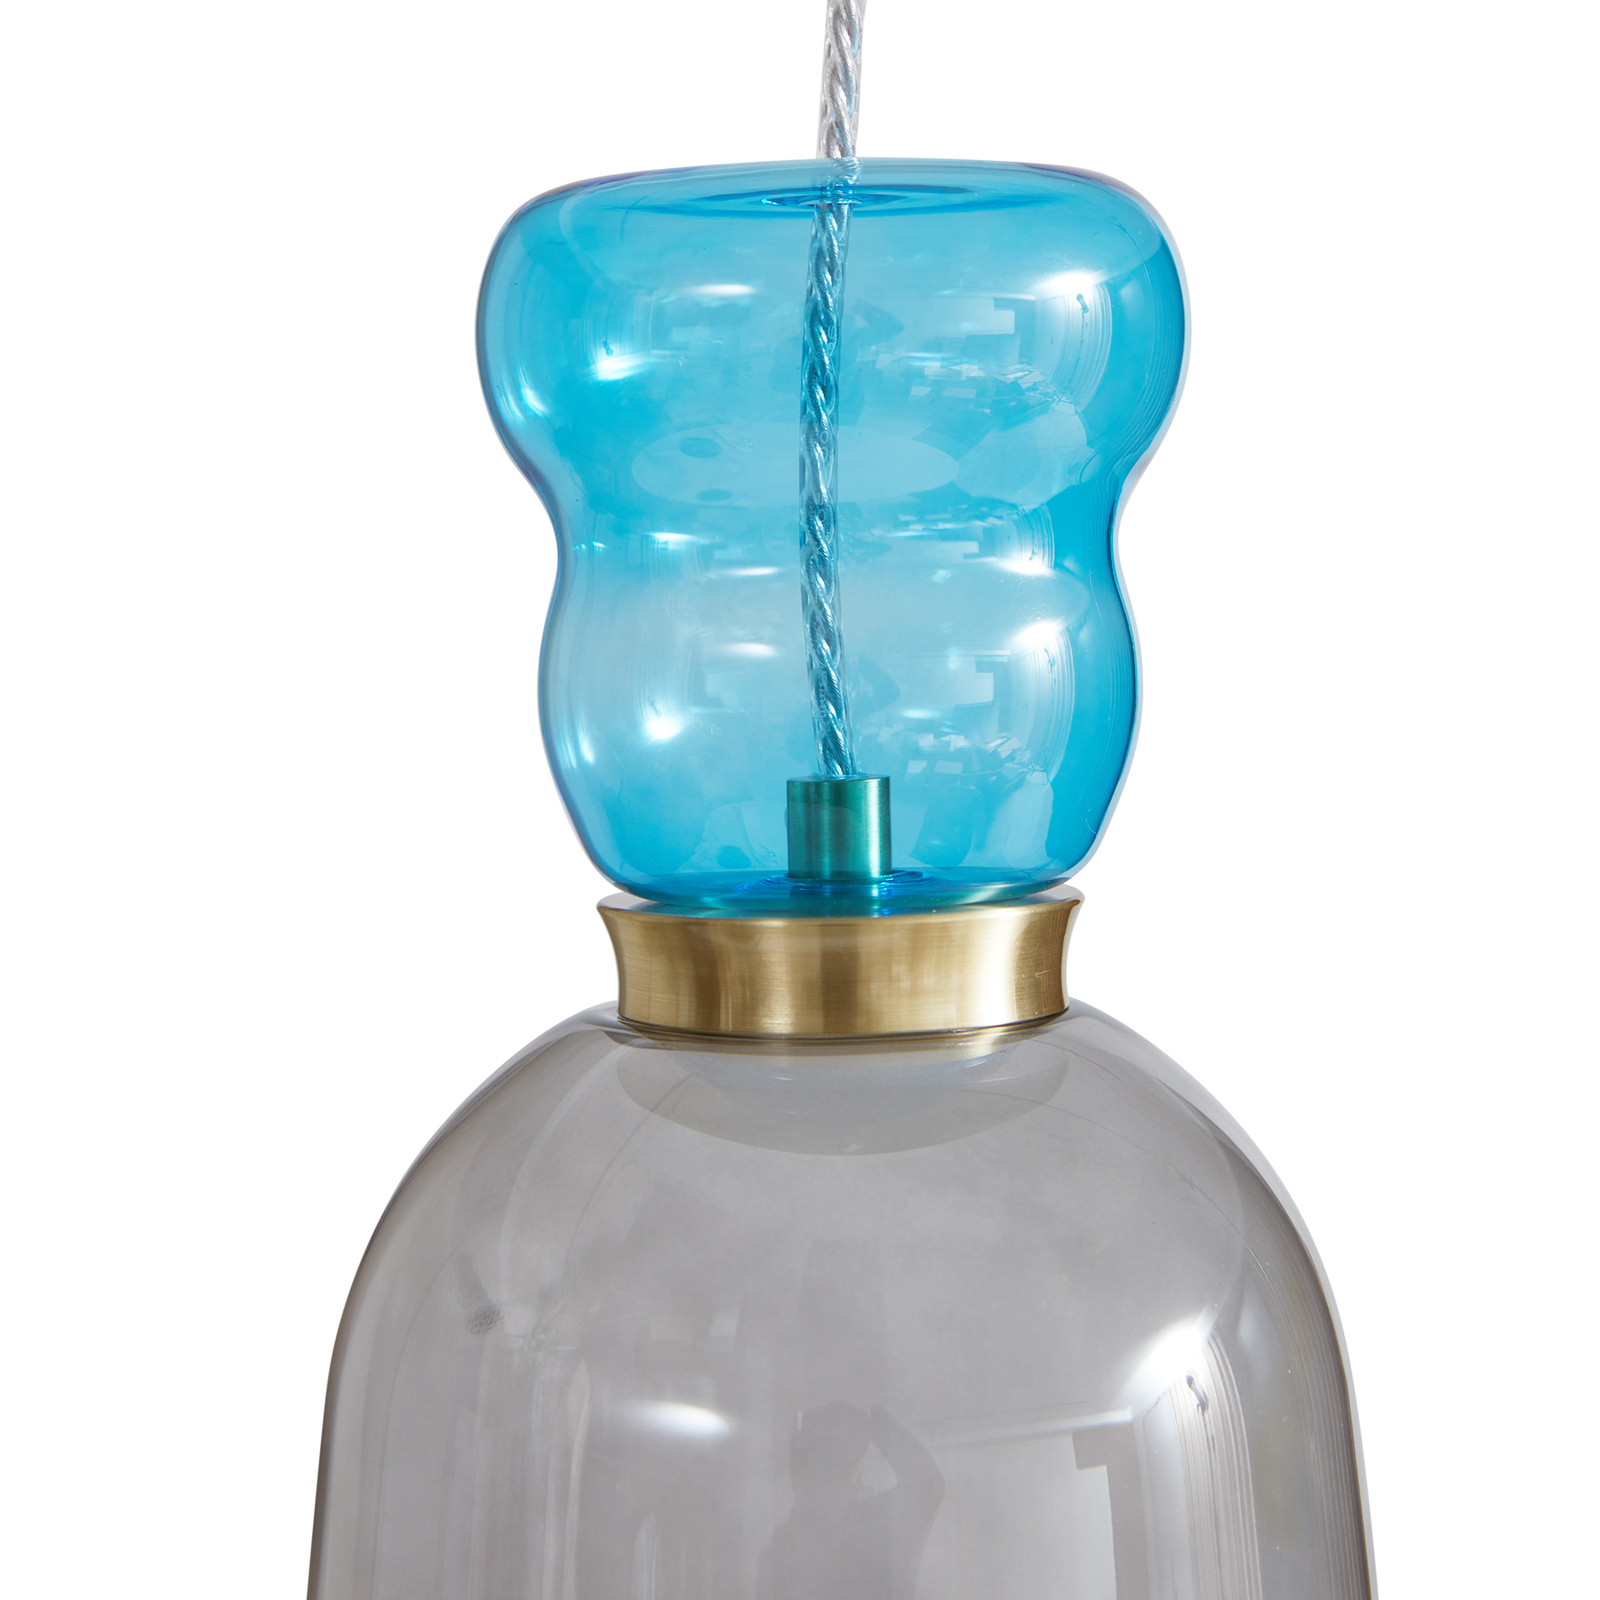 Lucande LED hanging light Fay, light grey/light blue, glass, Ø 15 cm